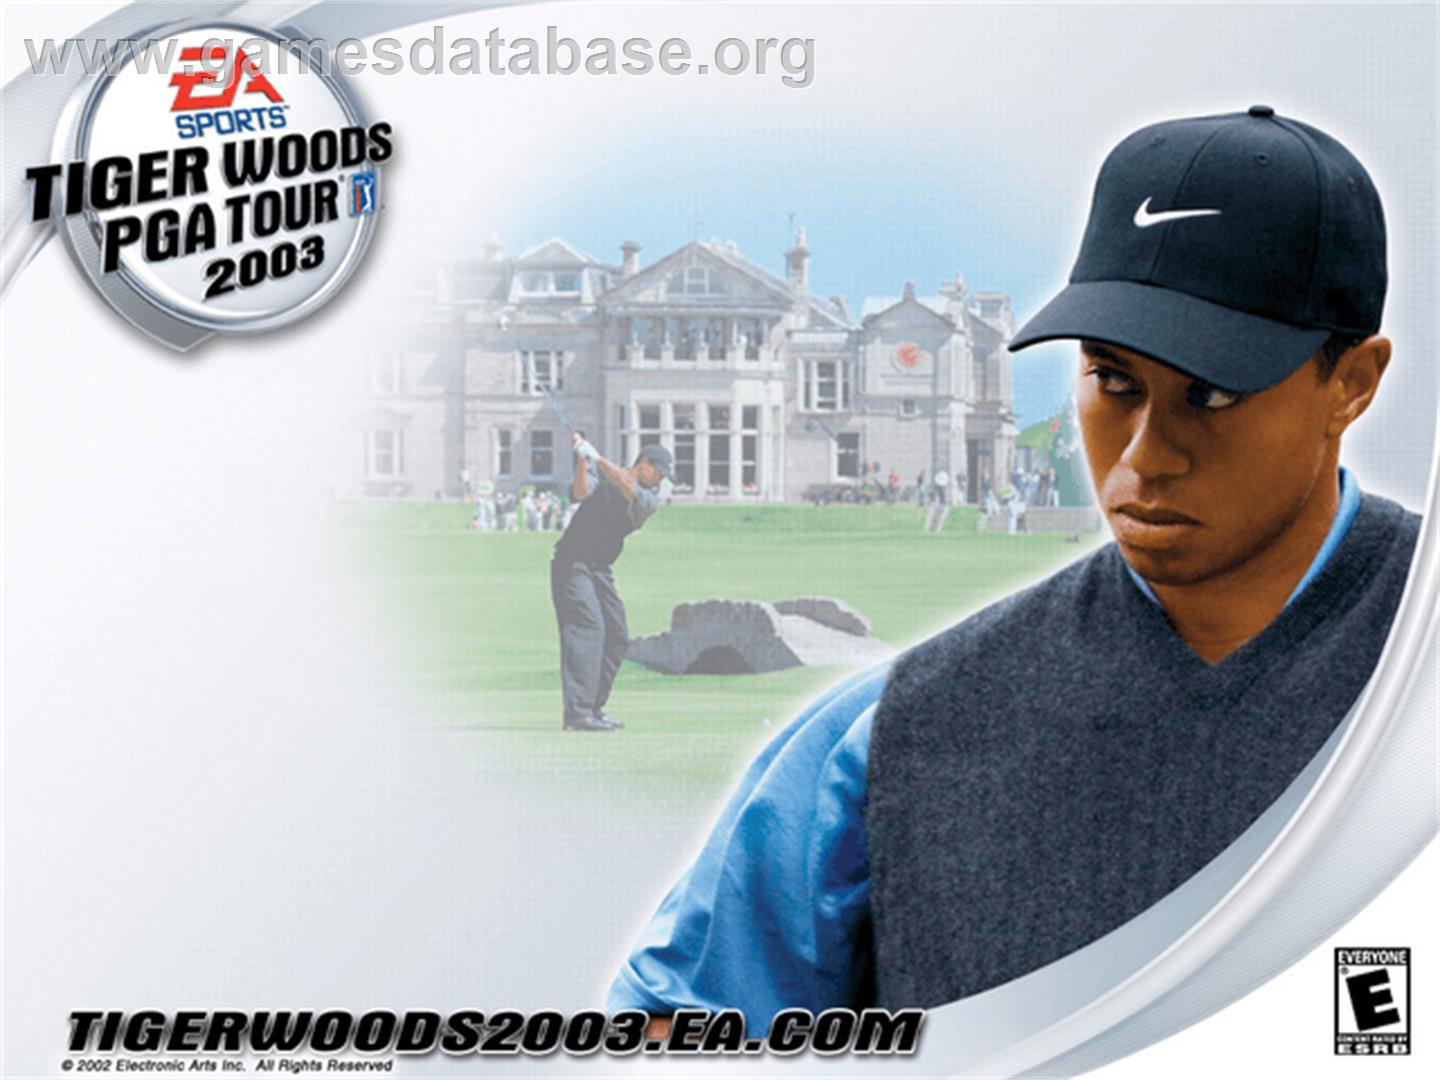 Tiger Woods PGA Tour 2003 - Microsoft Xbox - Artwork - Title Screen